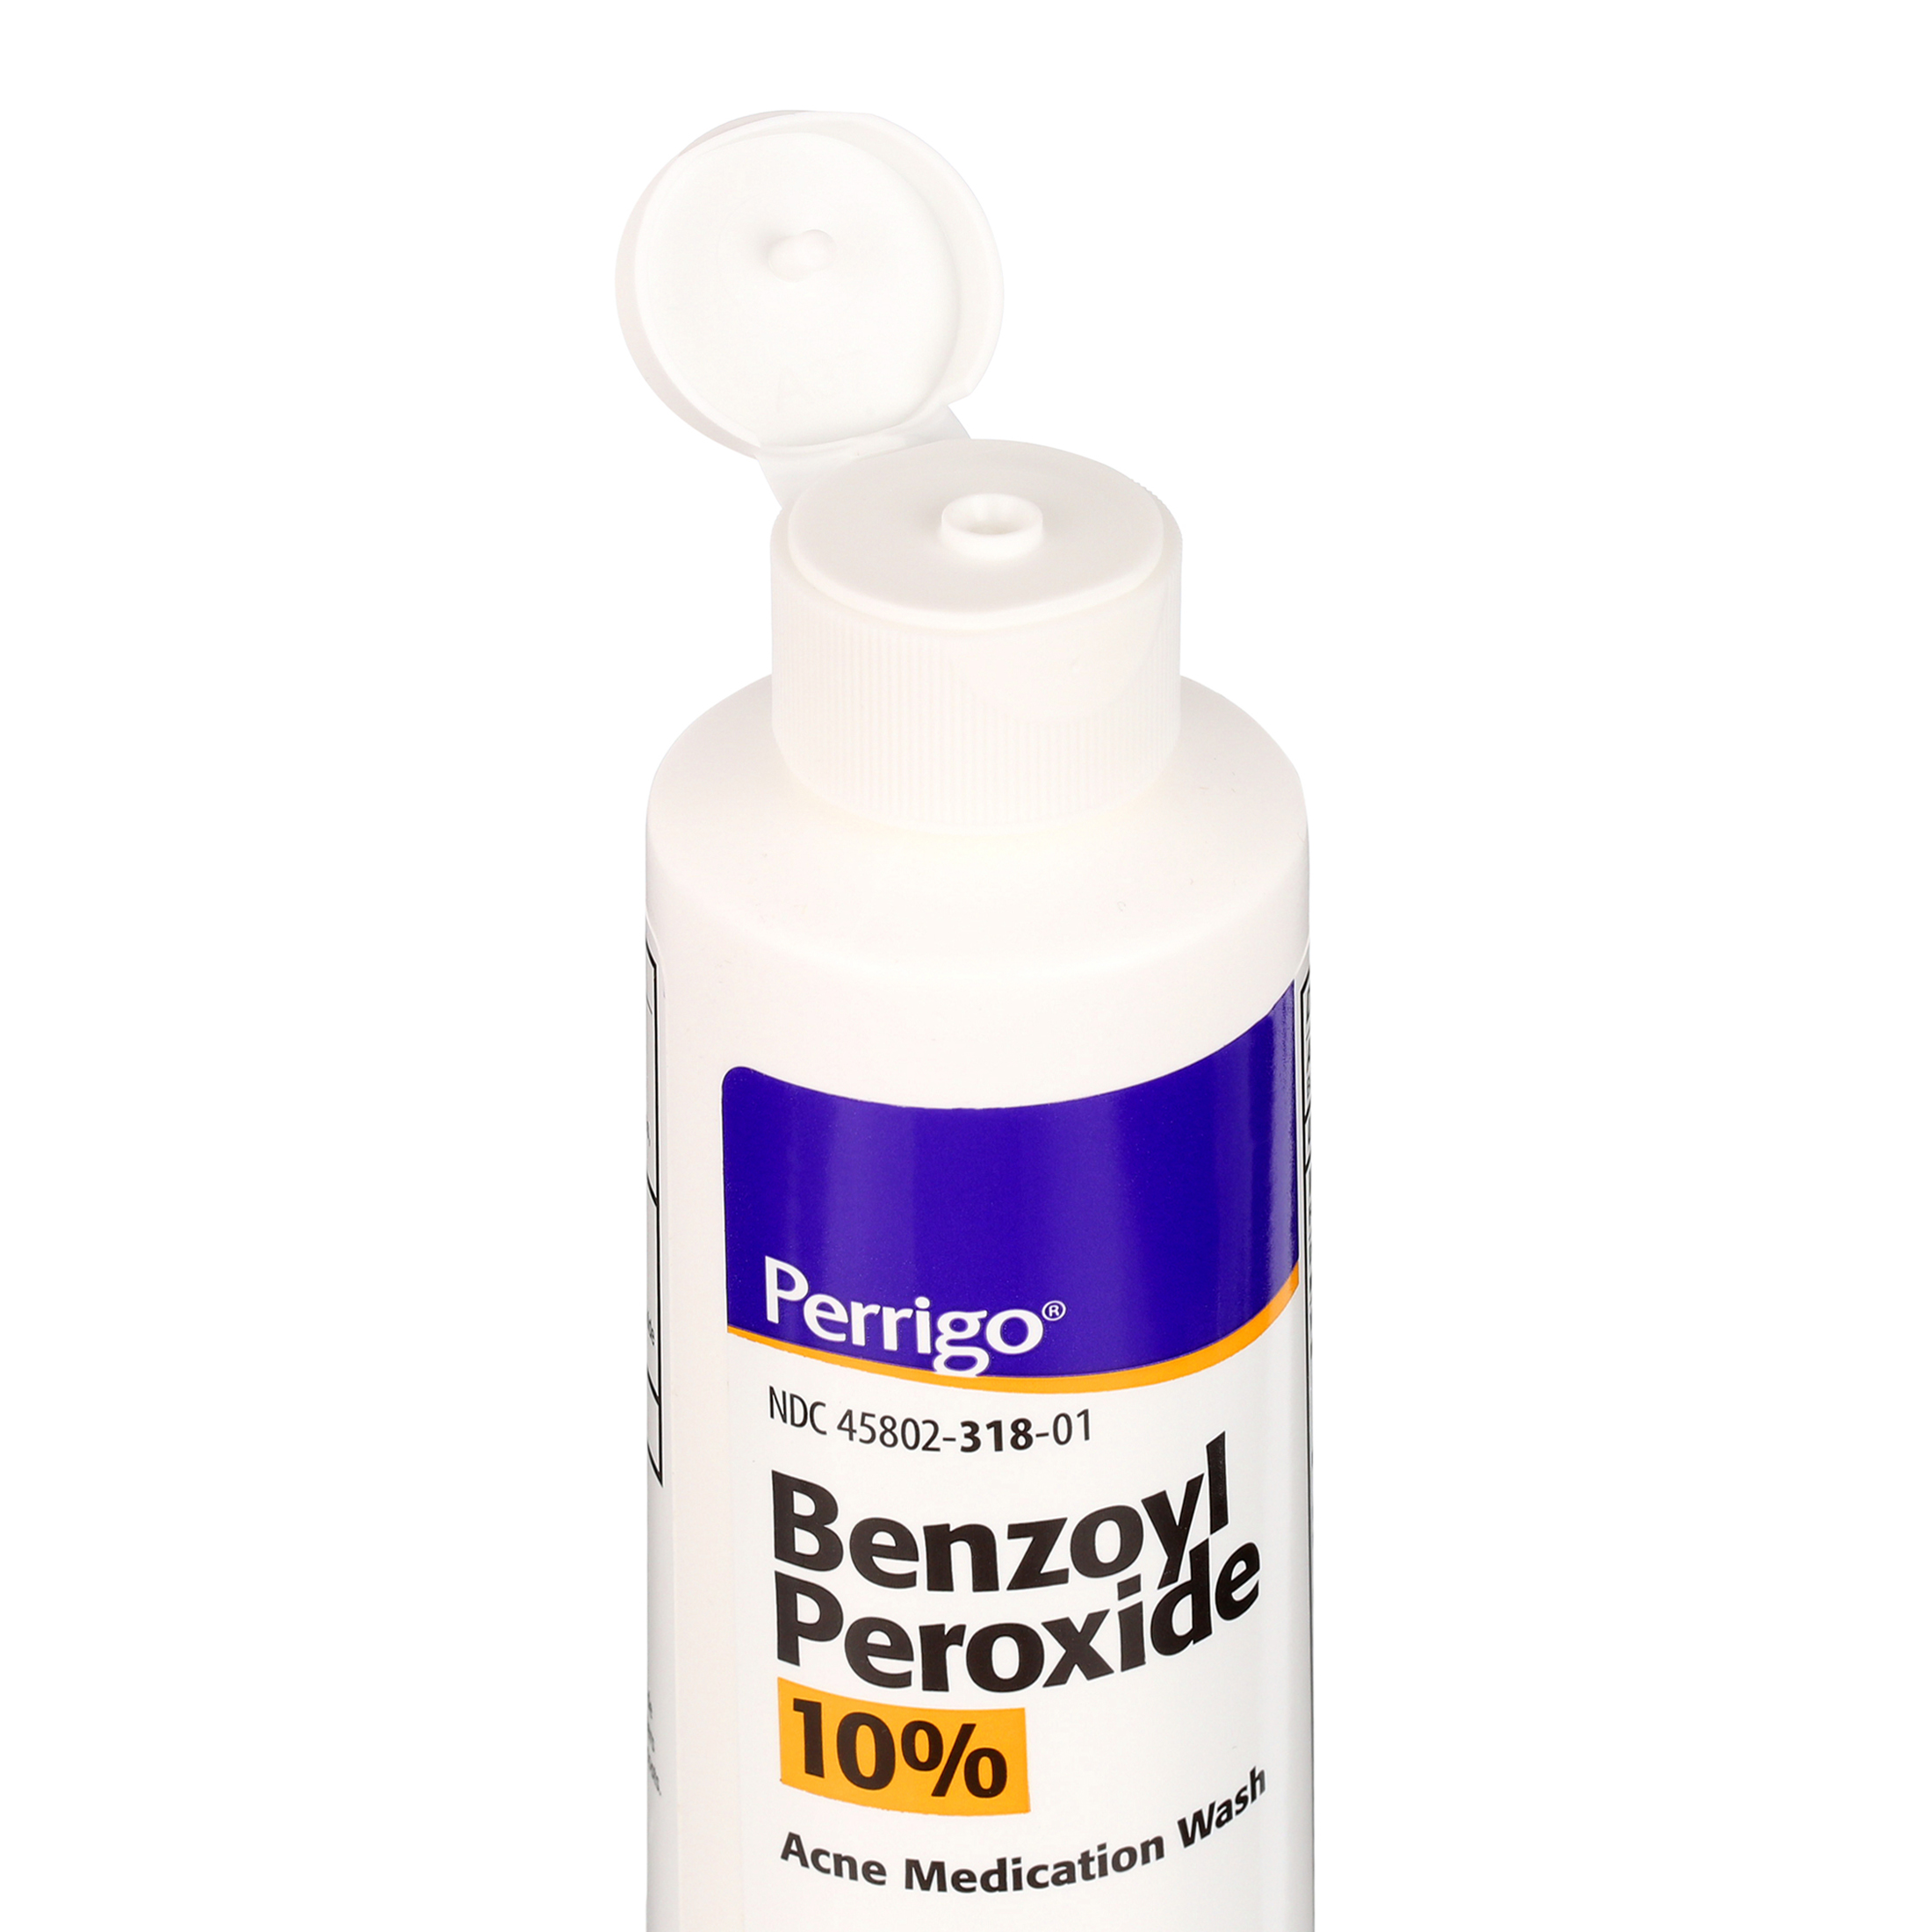 Perrigo Benzoyl Peroxide 10% Acne Medication Face Wash, 5 Fl. Oz. - image 3 of 6